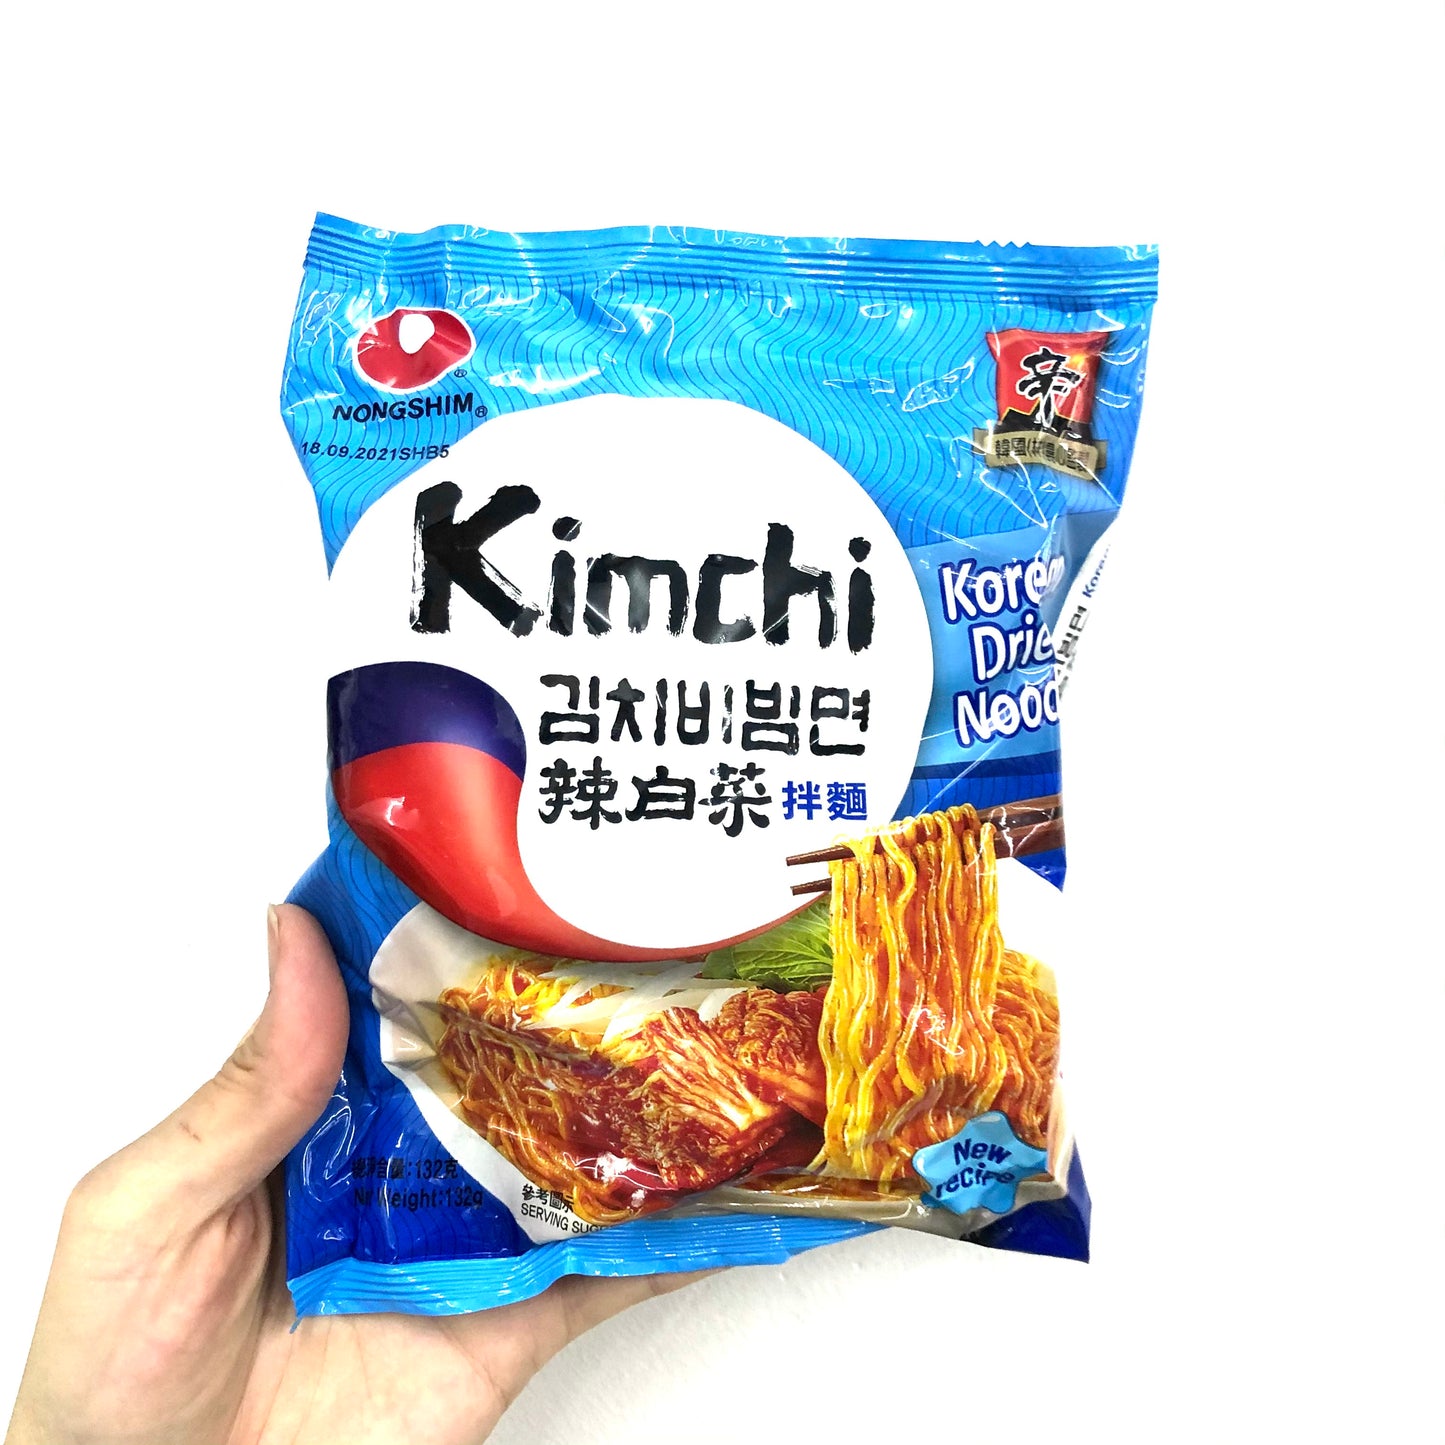 NONGSHIM Korean Kimchi Dry Noodle 132g